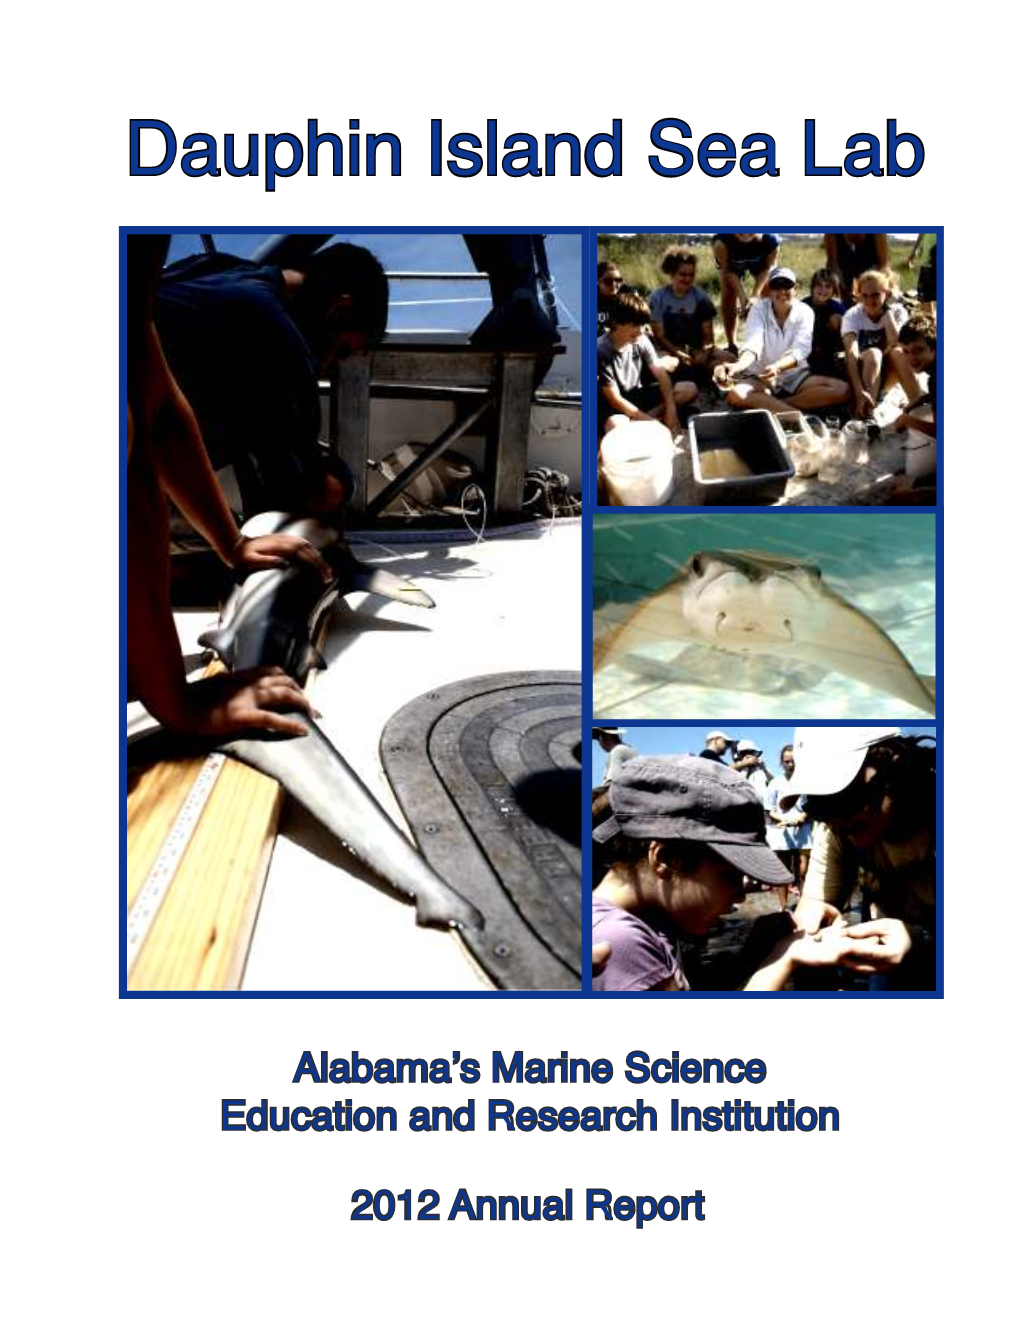 Dauphin Island Sea Lab Foundation